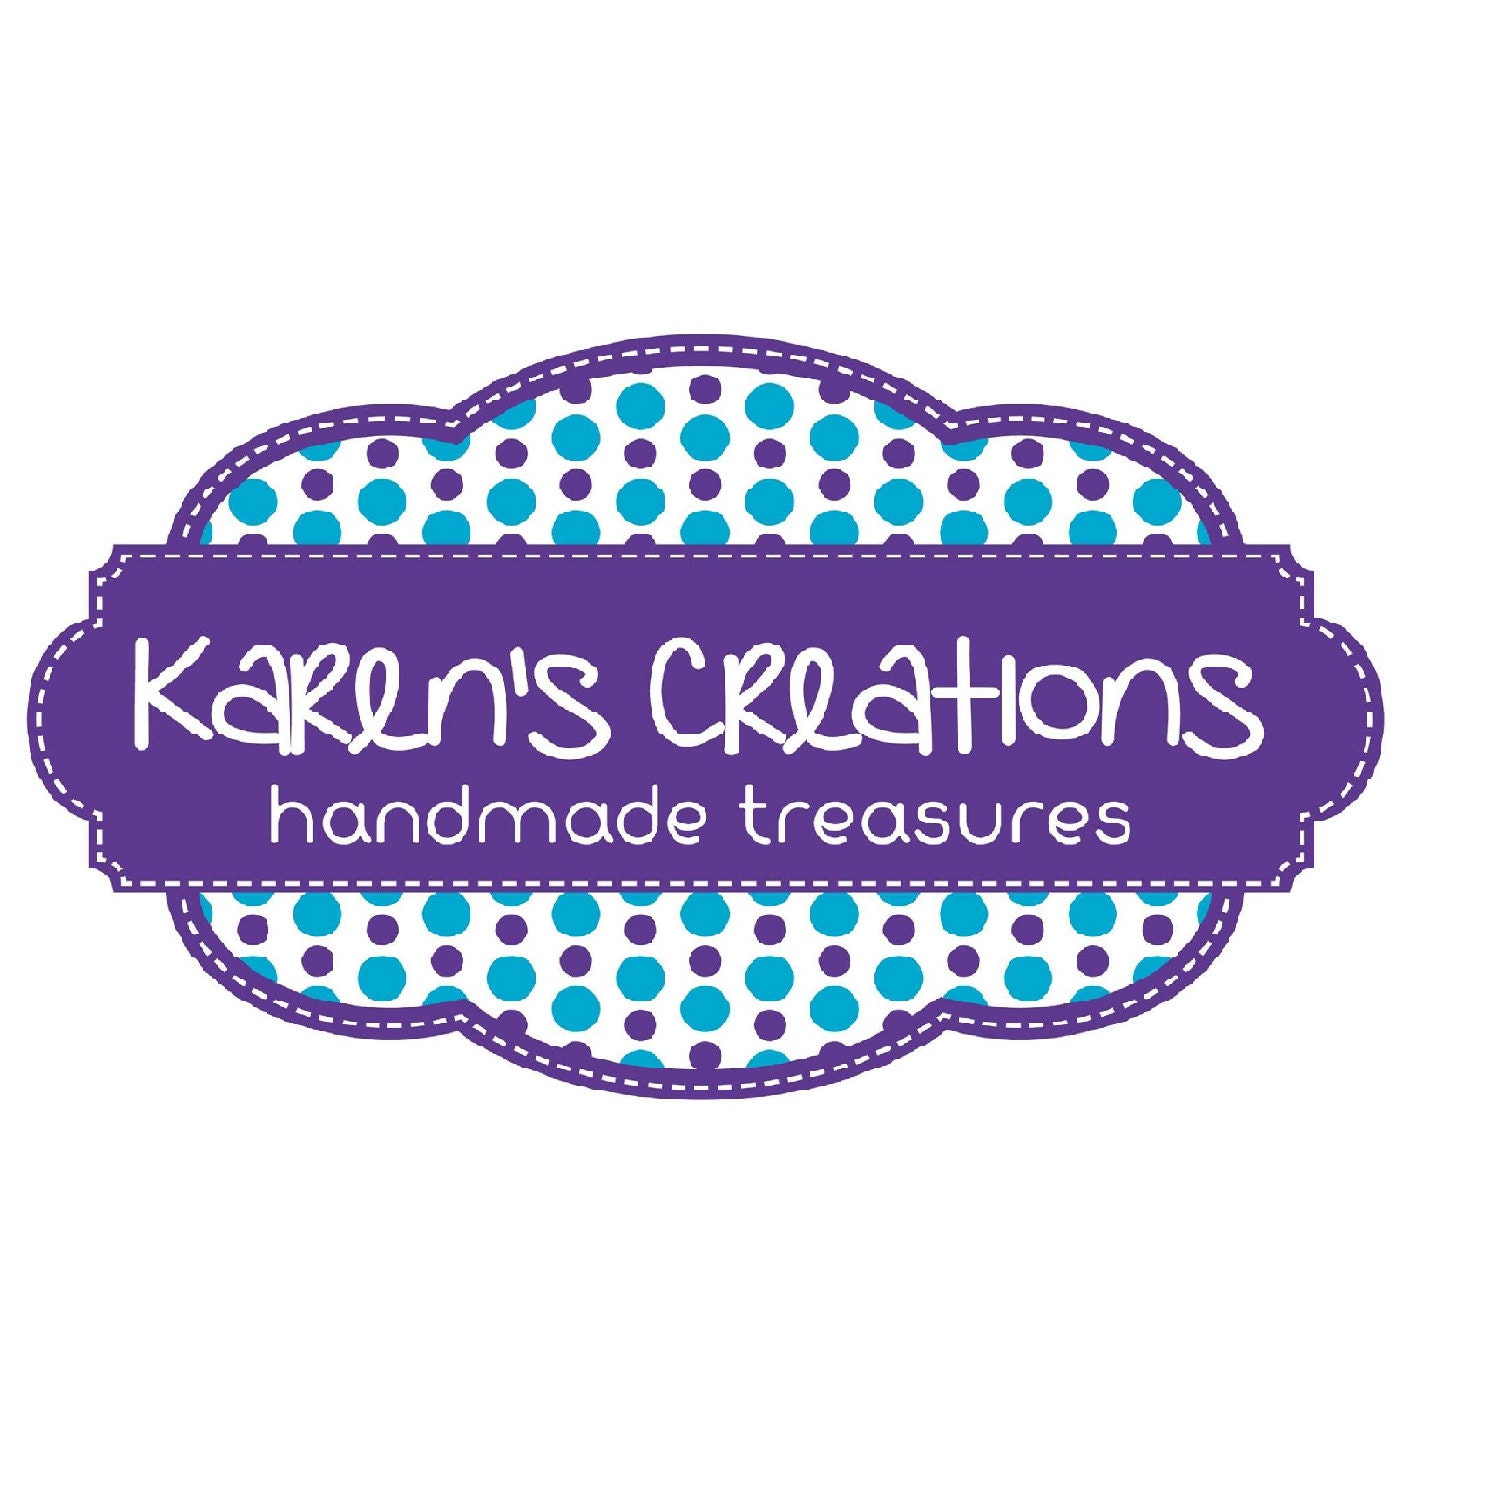 Welcome to Karen's Kreations